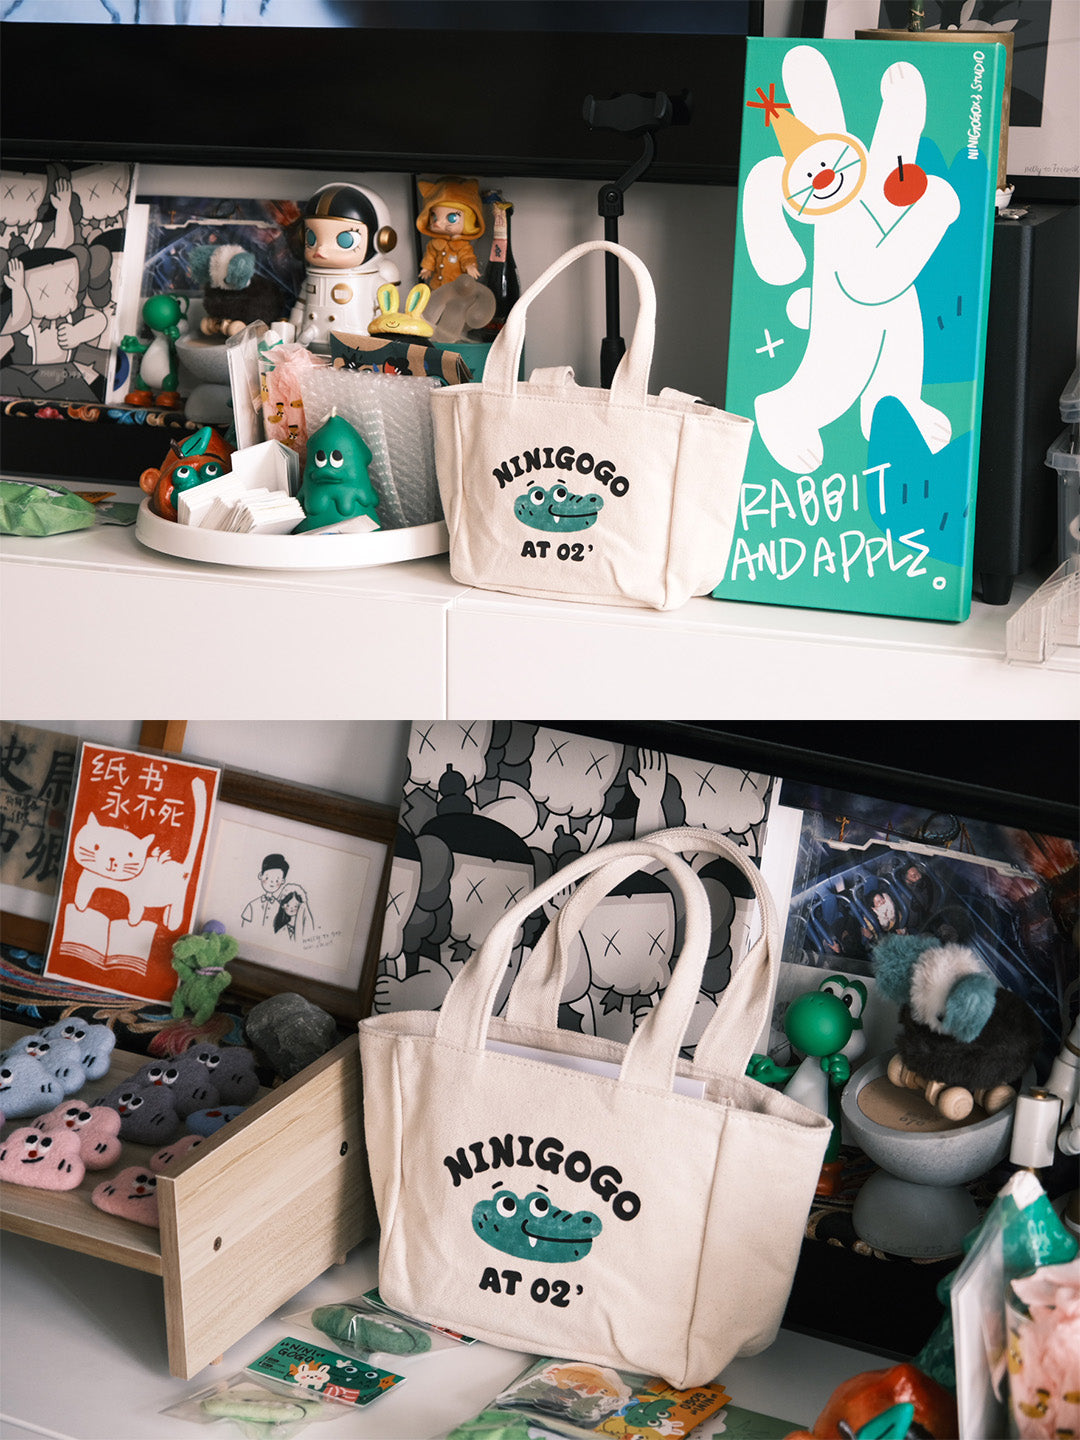 【Artists】Ninigogo Crocs Logo Canvas Tote Handbag